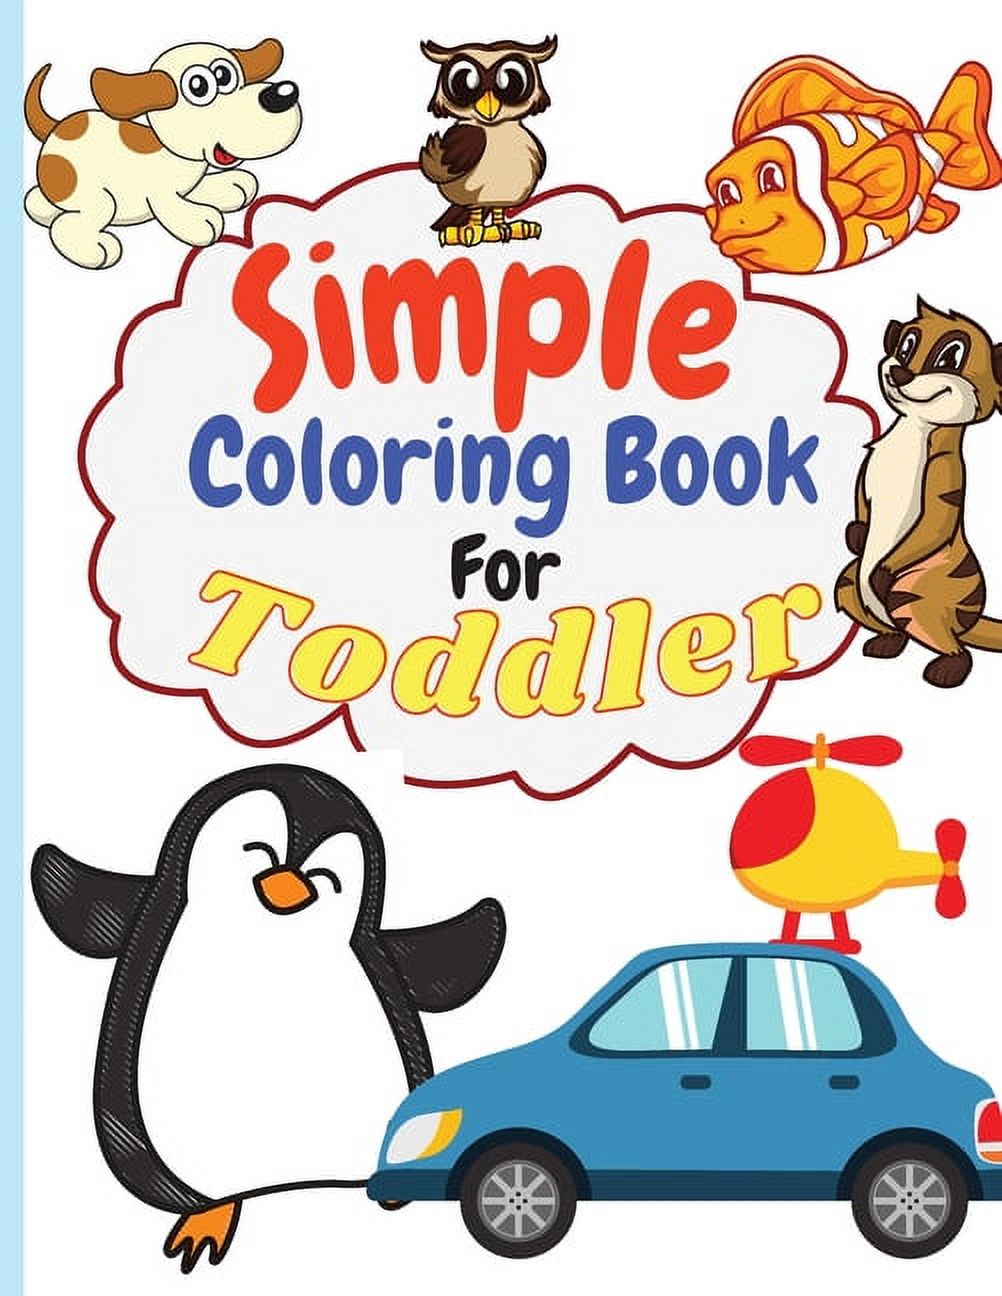 SIMPLE COLORING BOOK FOR TODDLER: Simple & Big Coloring Book for Toddler | Easy And Fun Coloring Pages For Kids Preschool and Kindergarten. (Big Coloring Book for Kids Ages 1-4) [Book]